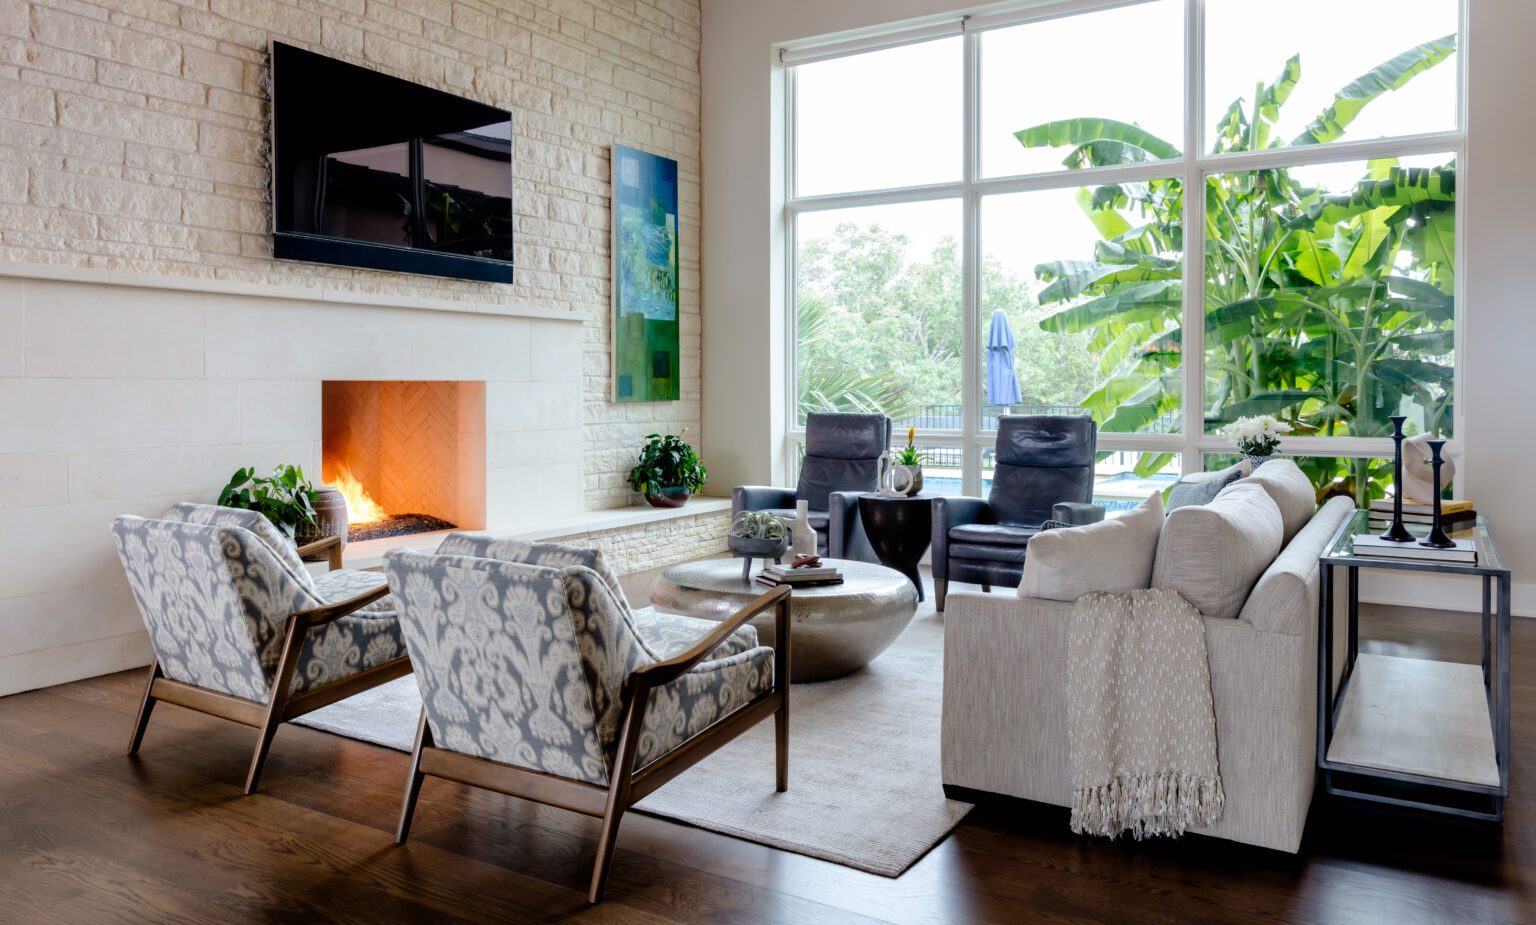 Westlake Austin Interior Design Luxury Living Room Stone Fireplace Transitional Modern Clean Furniture 1536x925 